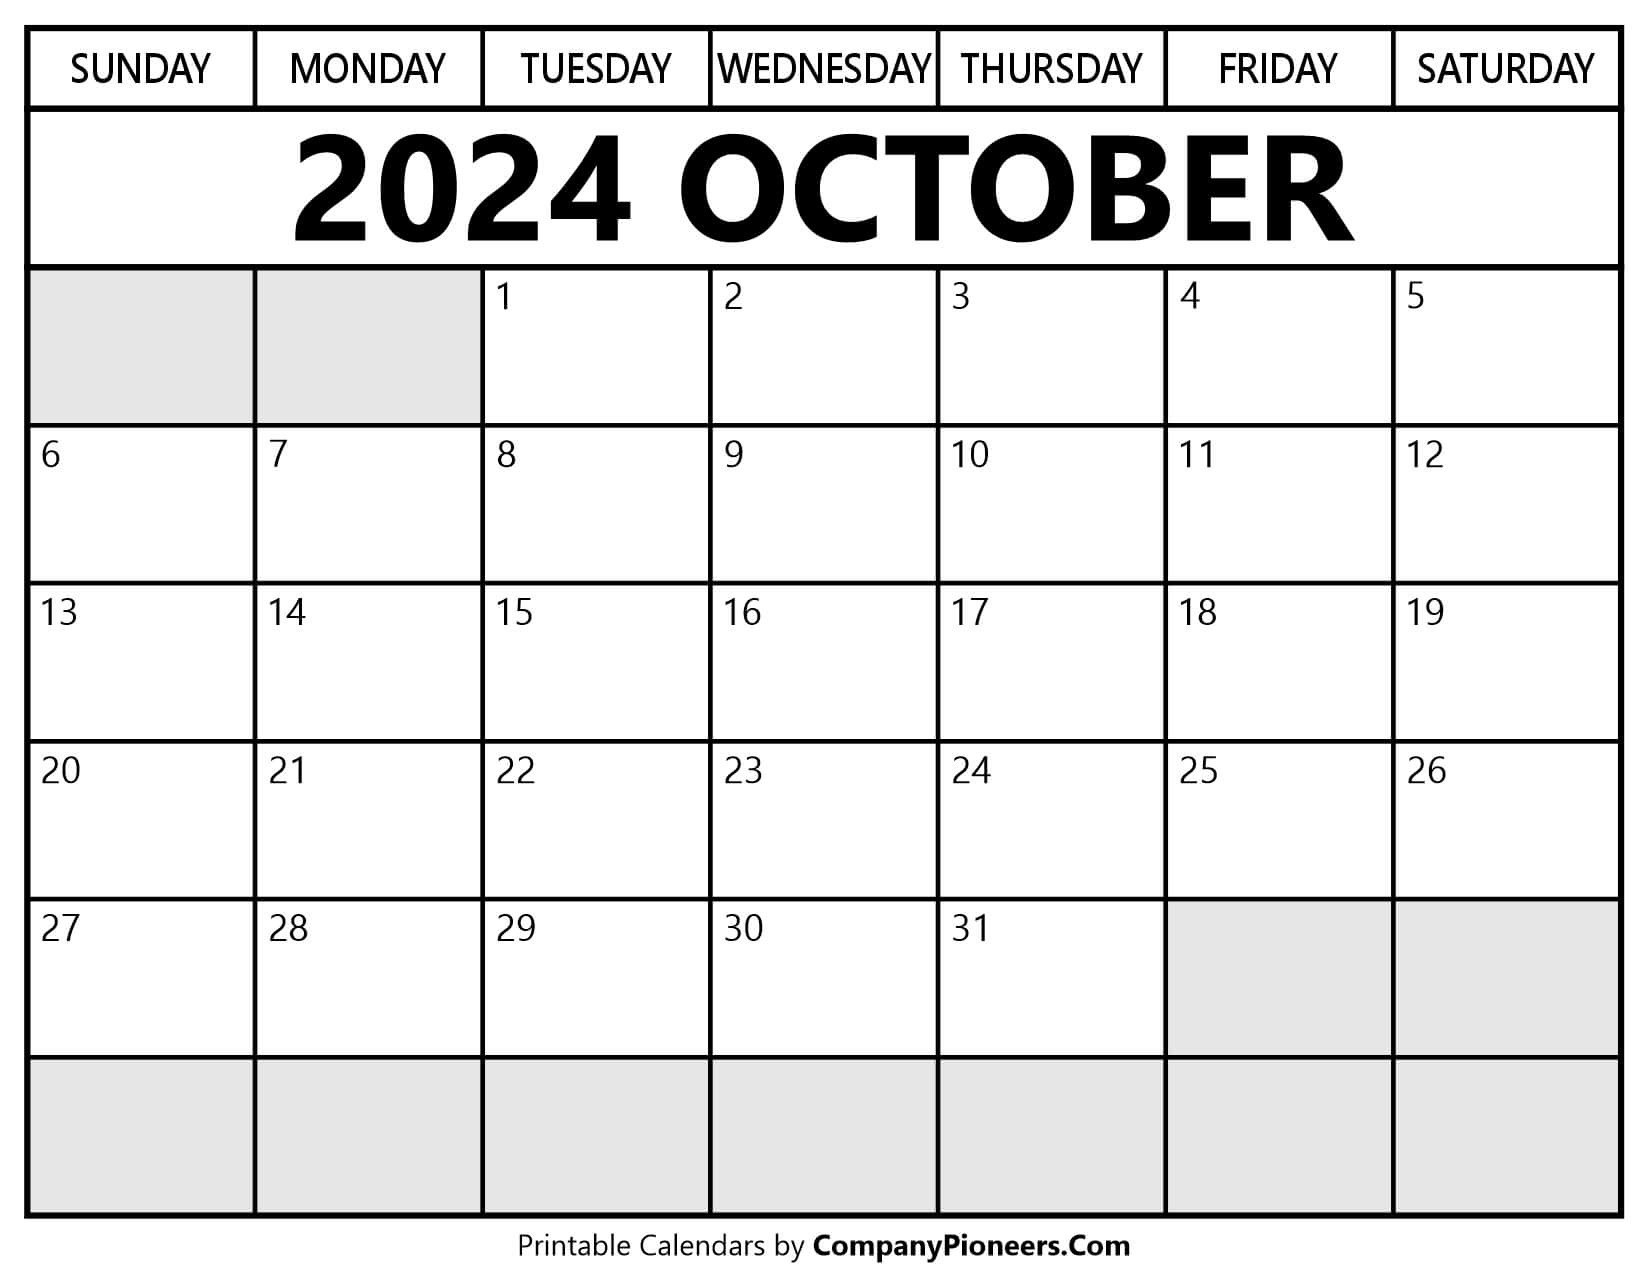 October 2024 Calendar Segoe UI Font